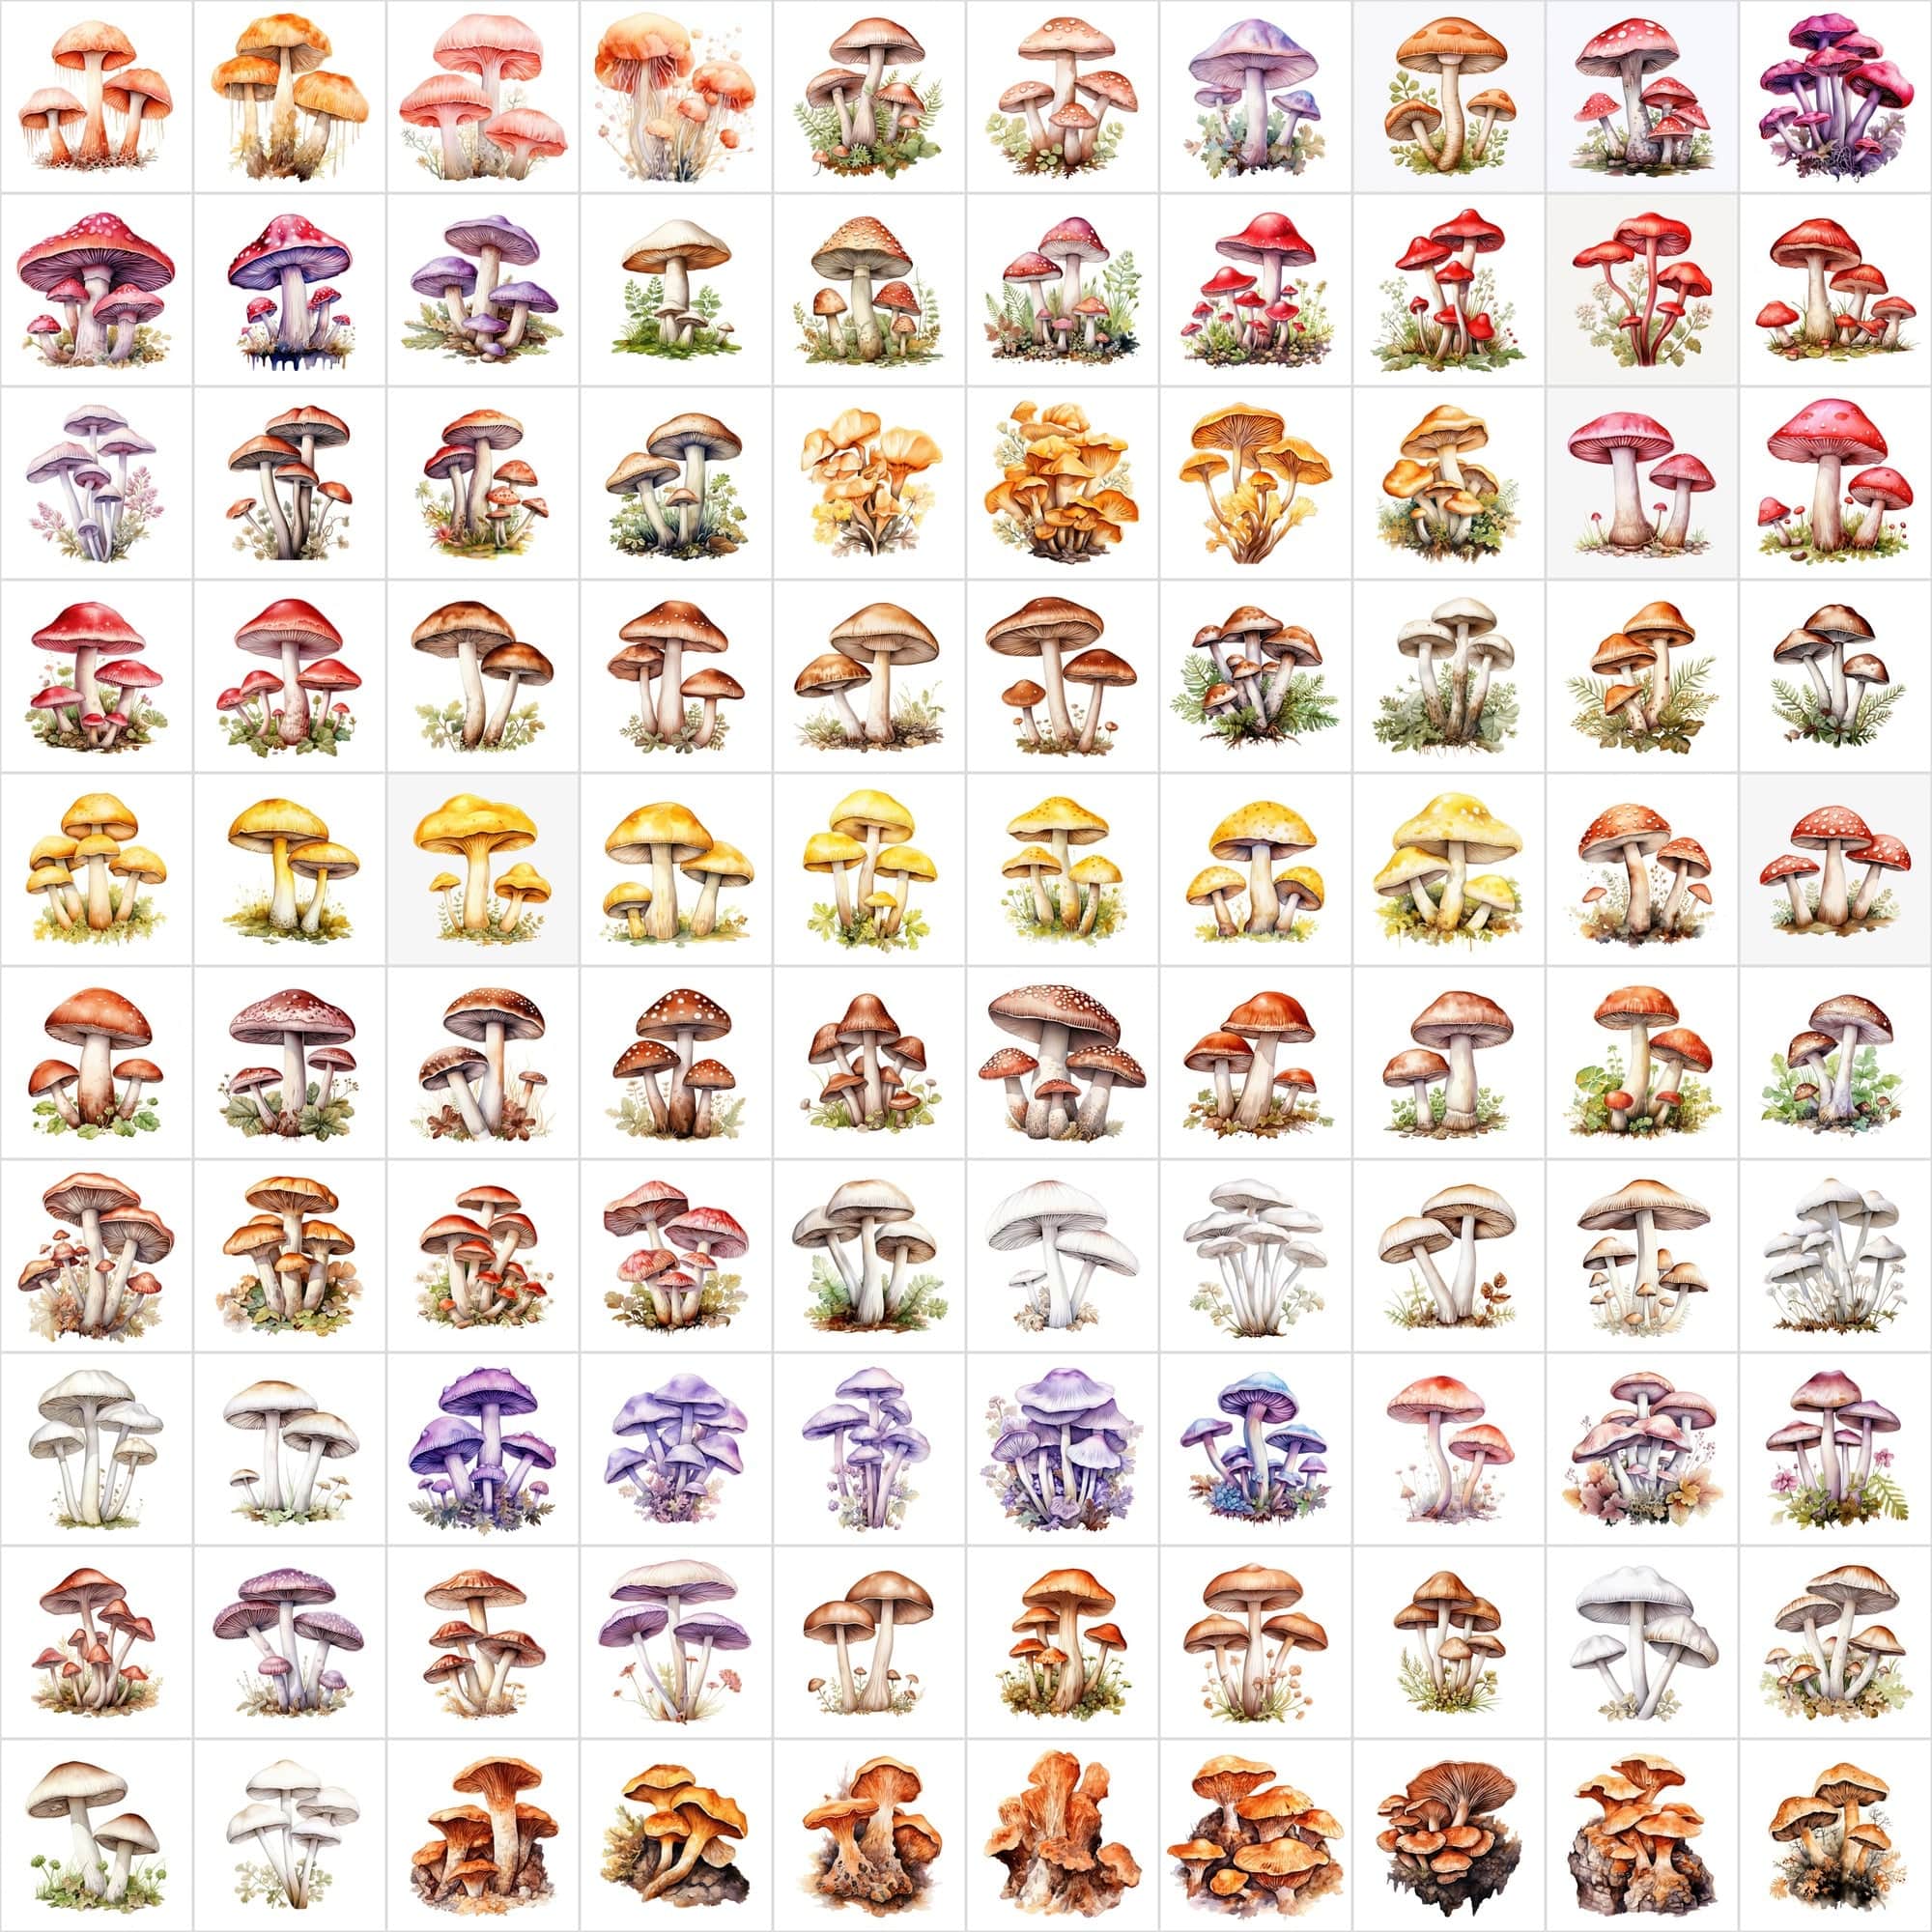 Watercolor Mushroom PNG Collection - 1170 Versatile Images with Commercial License, Transparent & White Backgrounds Digital Download Sumobundle